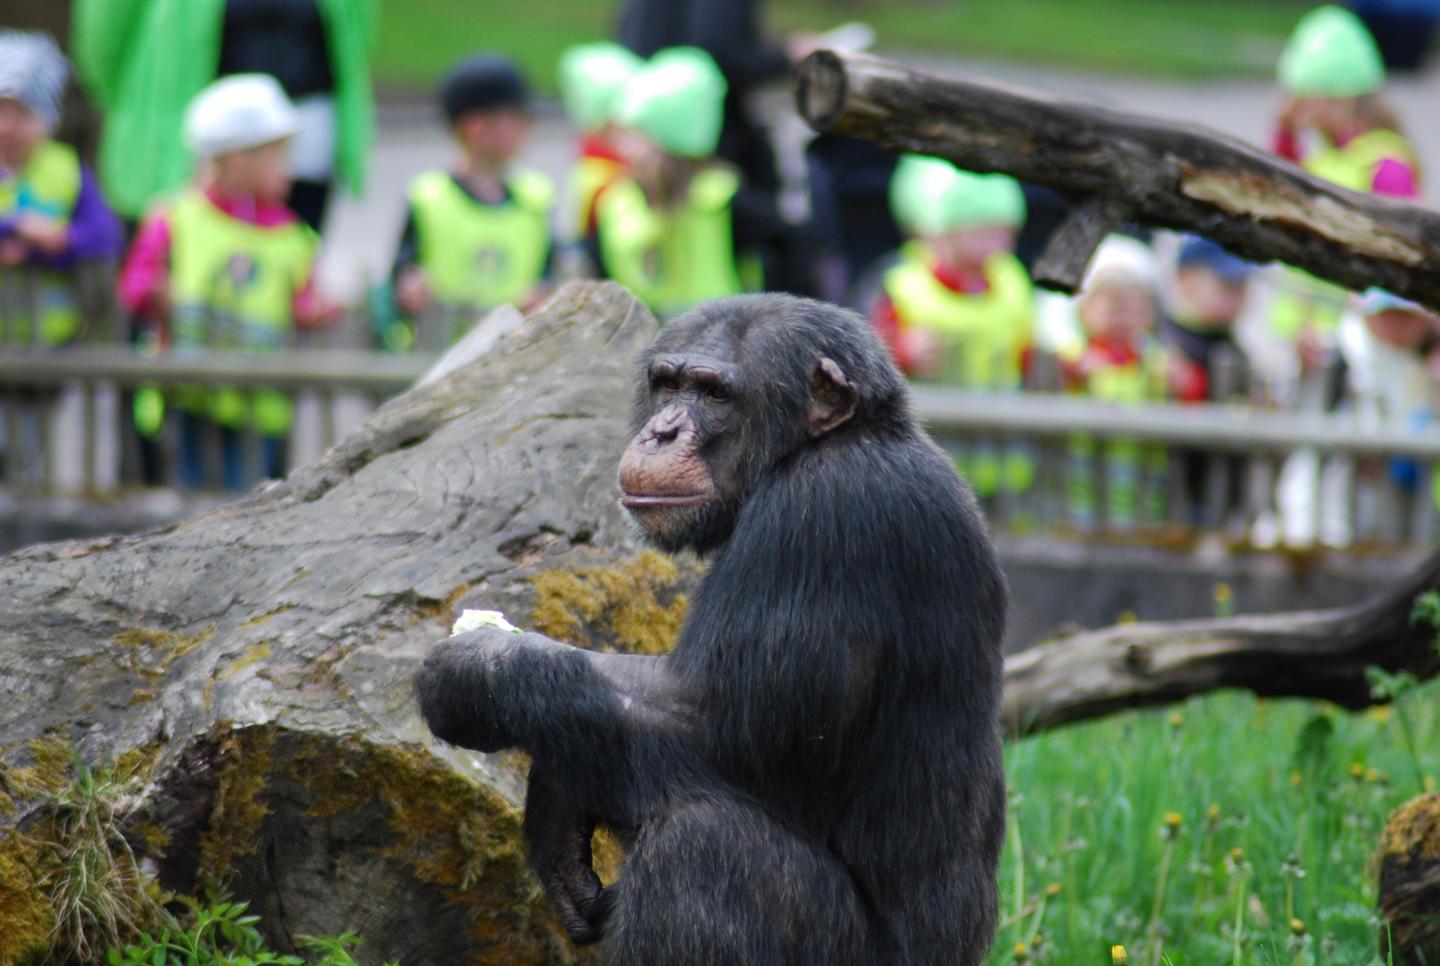 Chimpanzee at Furuvik Zoo in Sweden